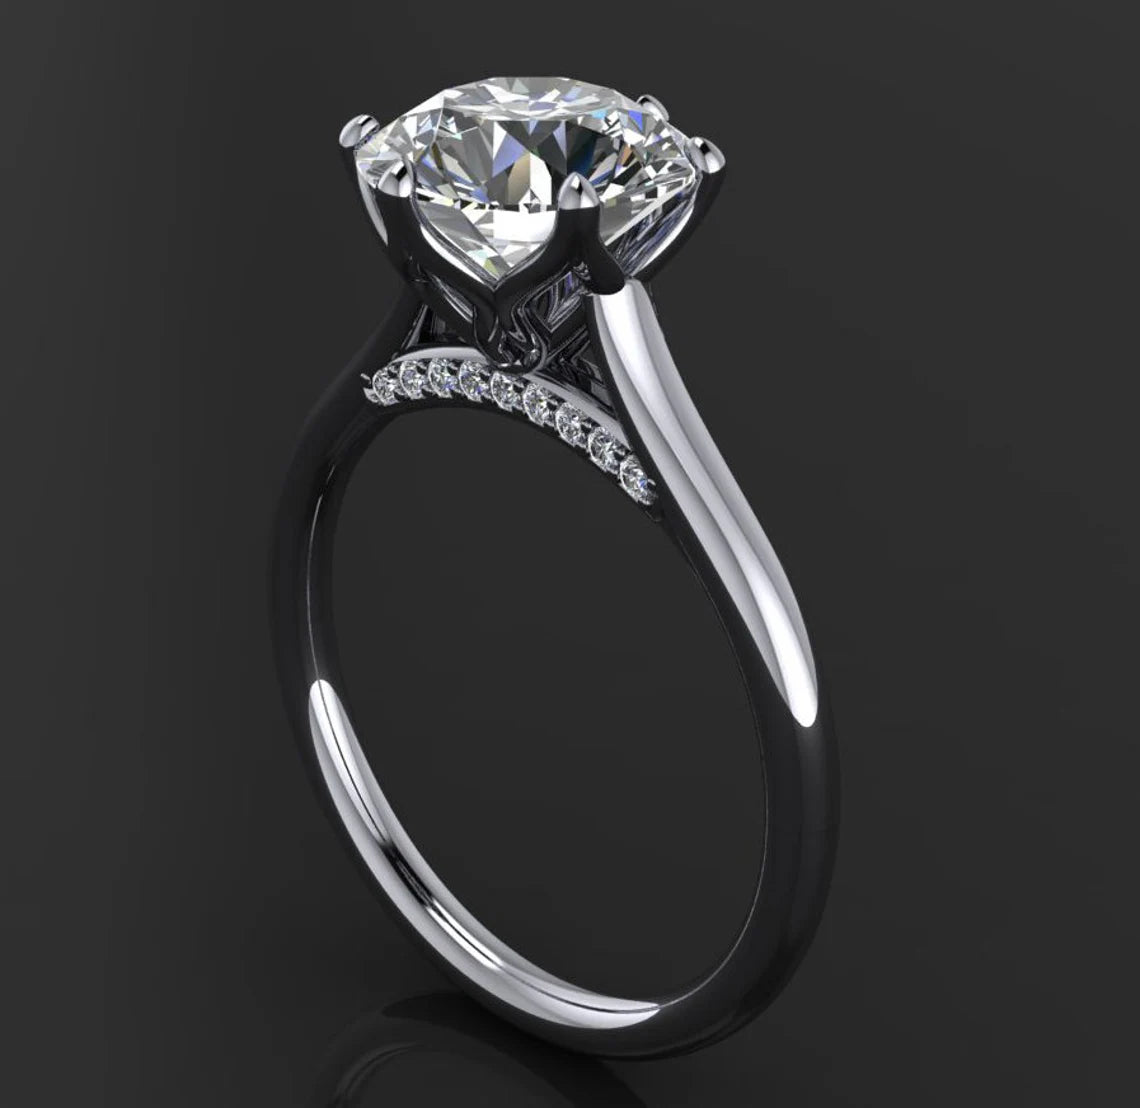 darby ring - 2 carat round NEO moissanite engagement ring, diamond bridge - J Hollywood Designs